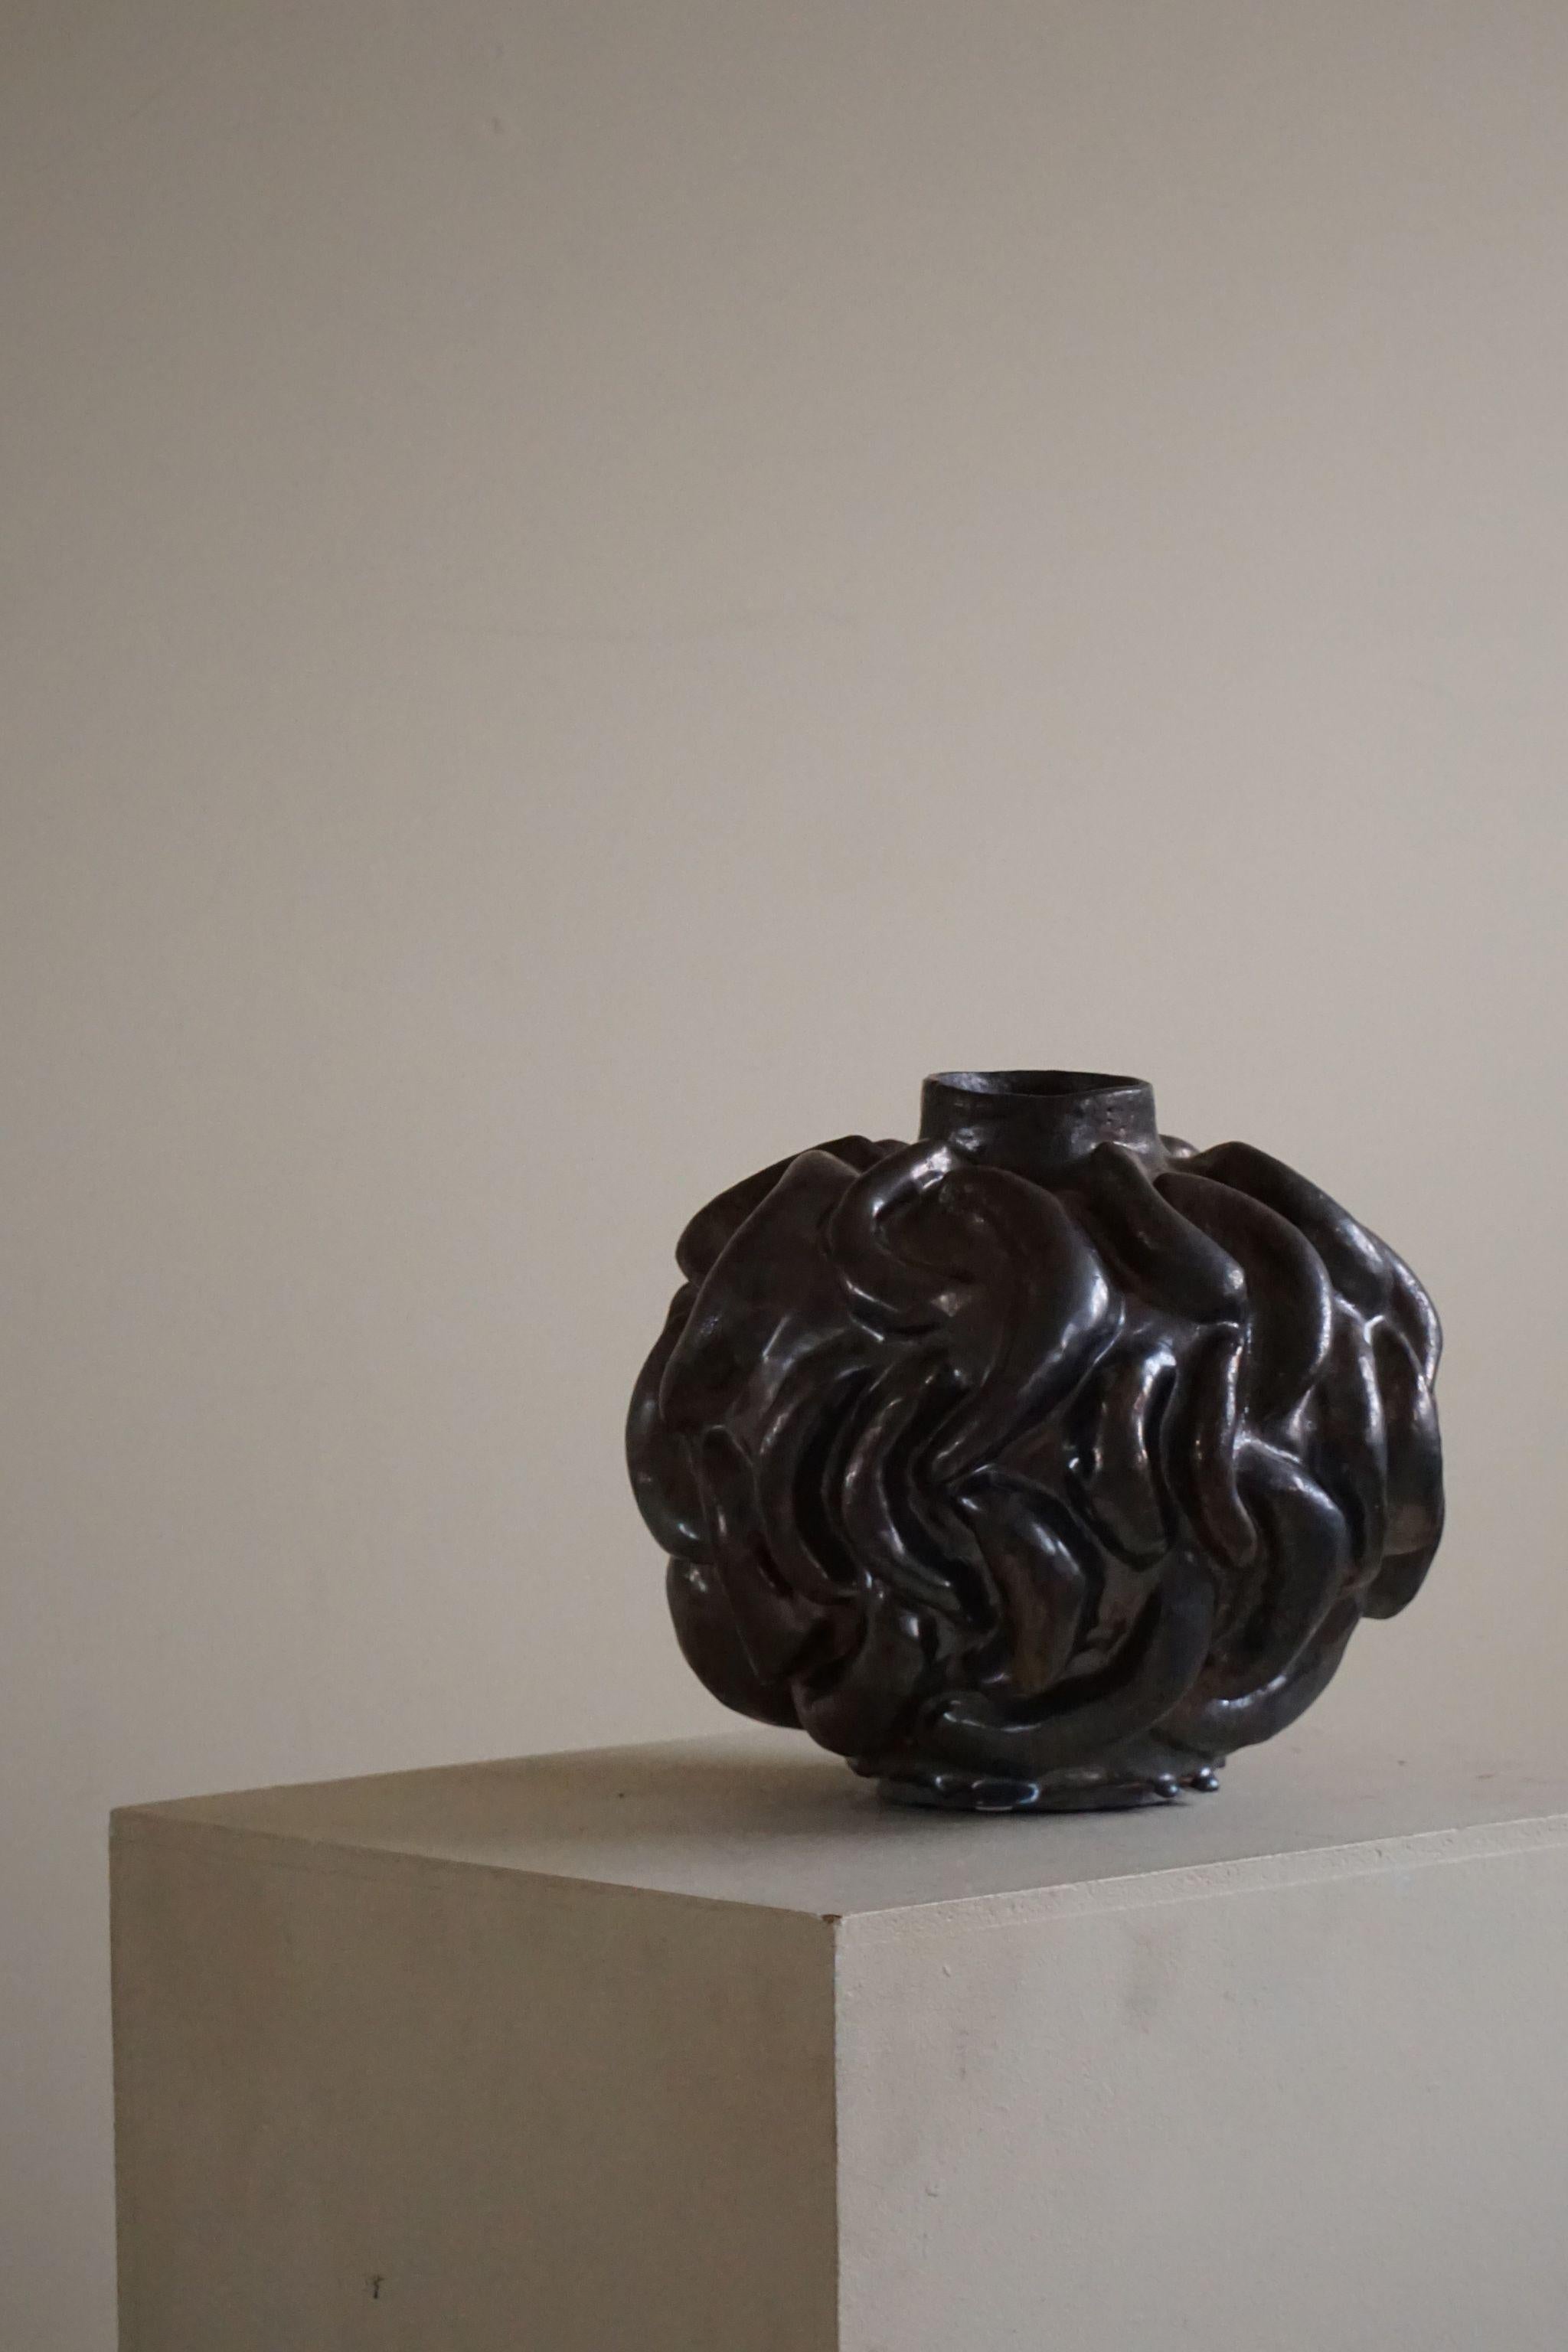 Hand-Crafted Large Ceramic, Stoneware Vase in Bronze Glaze by Danish Artist Ole Victor, 2021